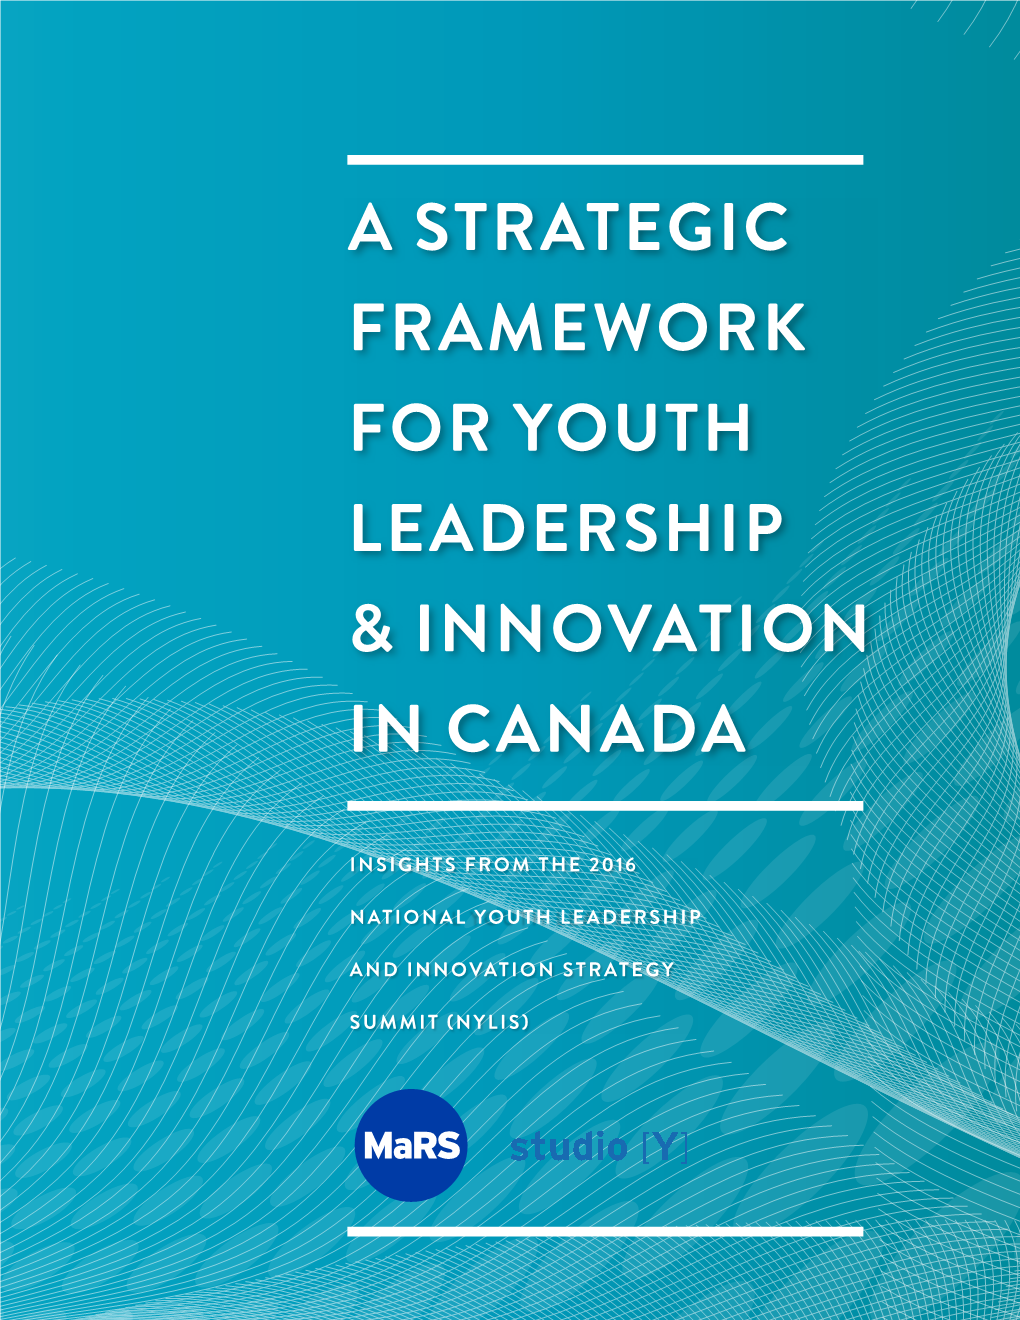 A Strategic Framework for Youth Leadership & Innovation in Canada